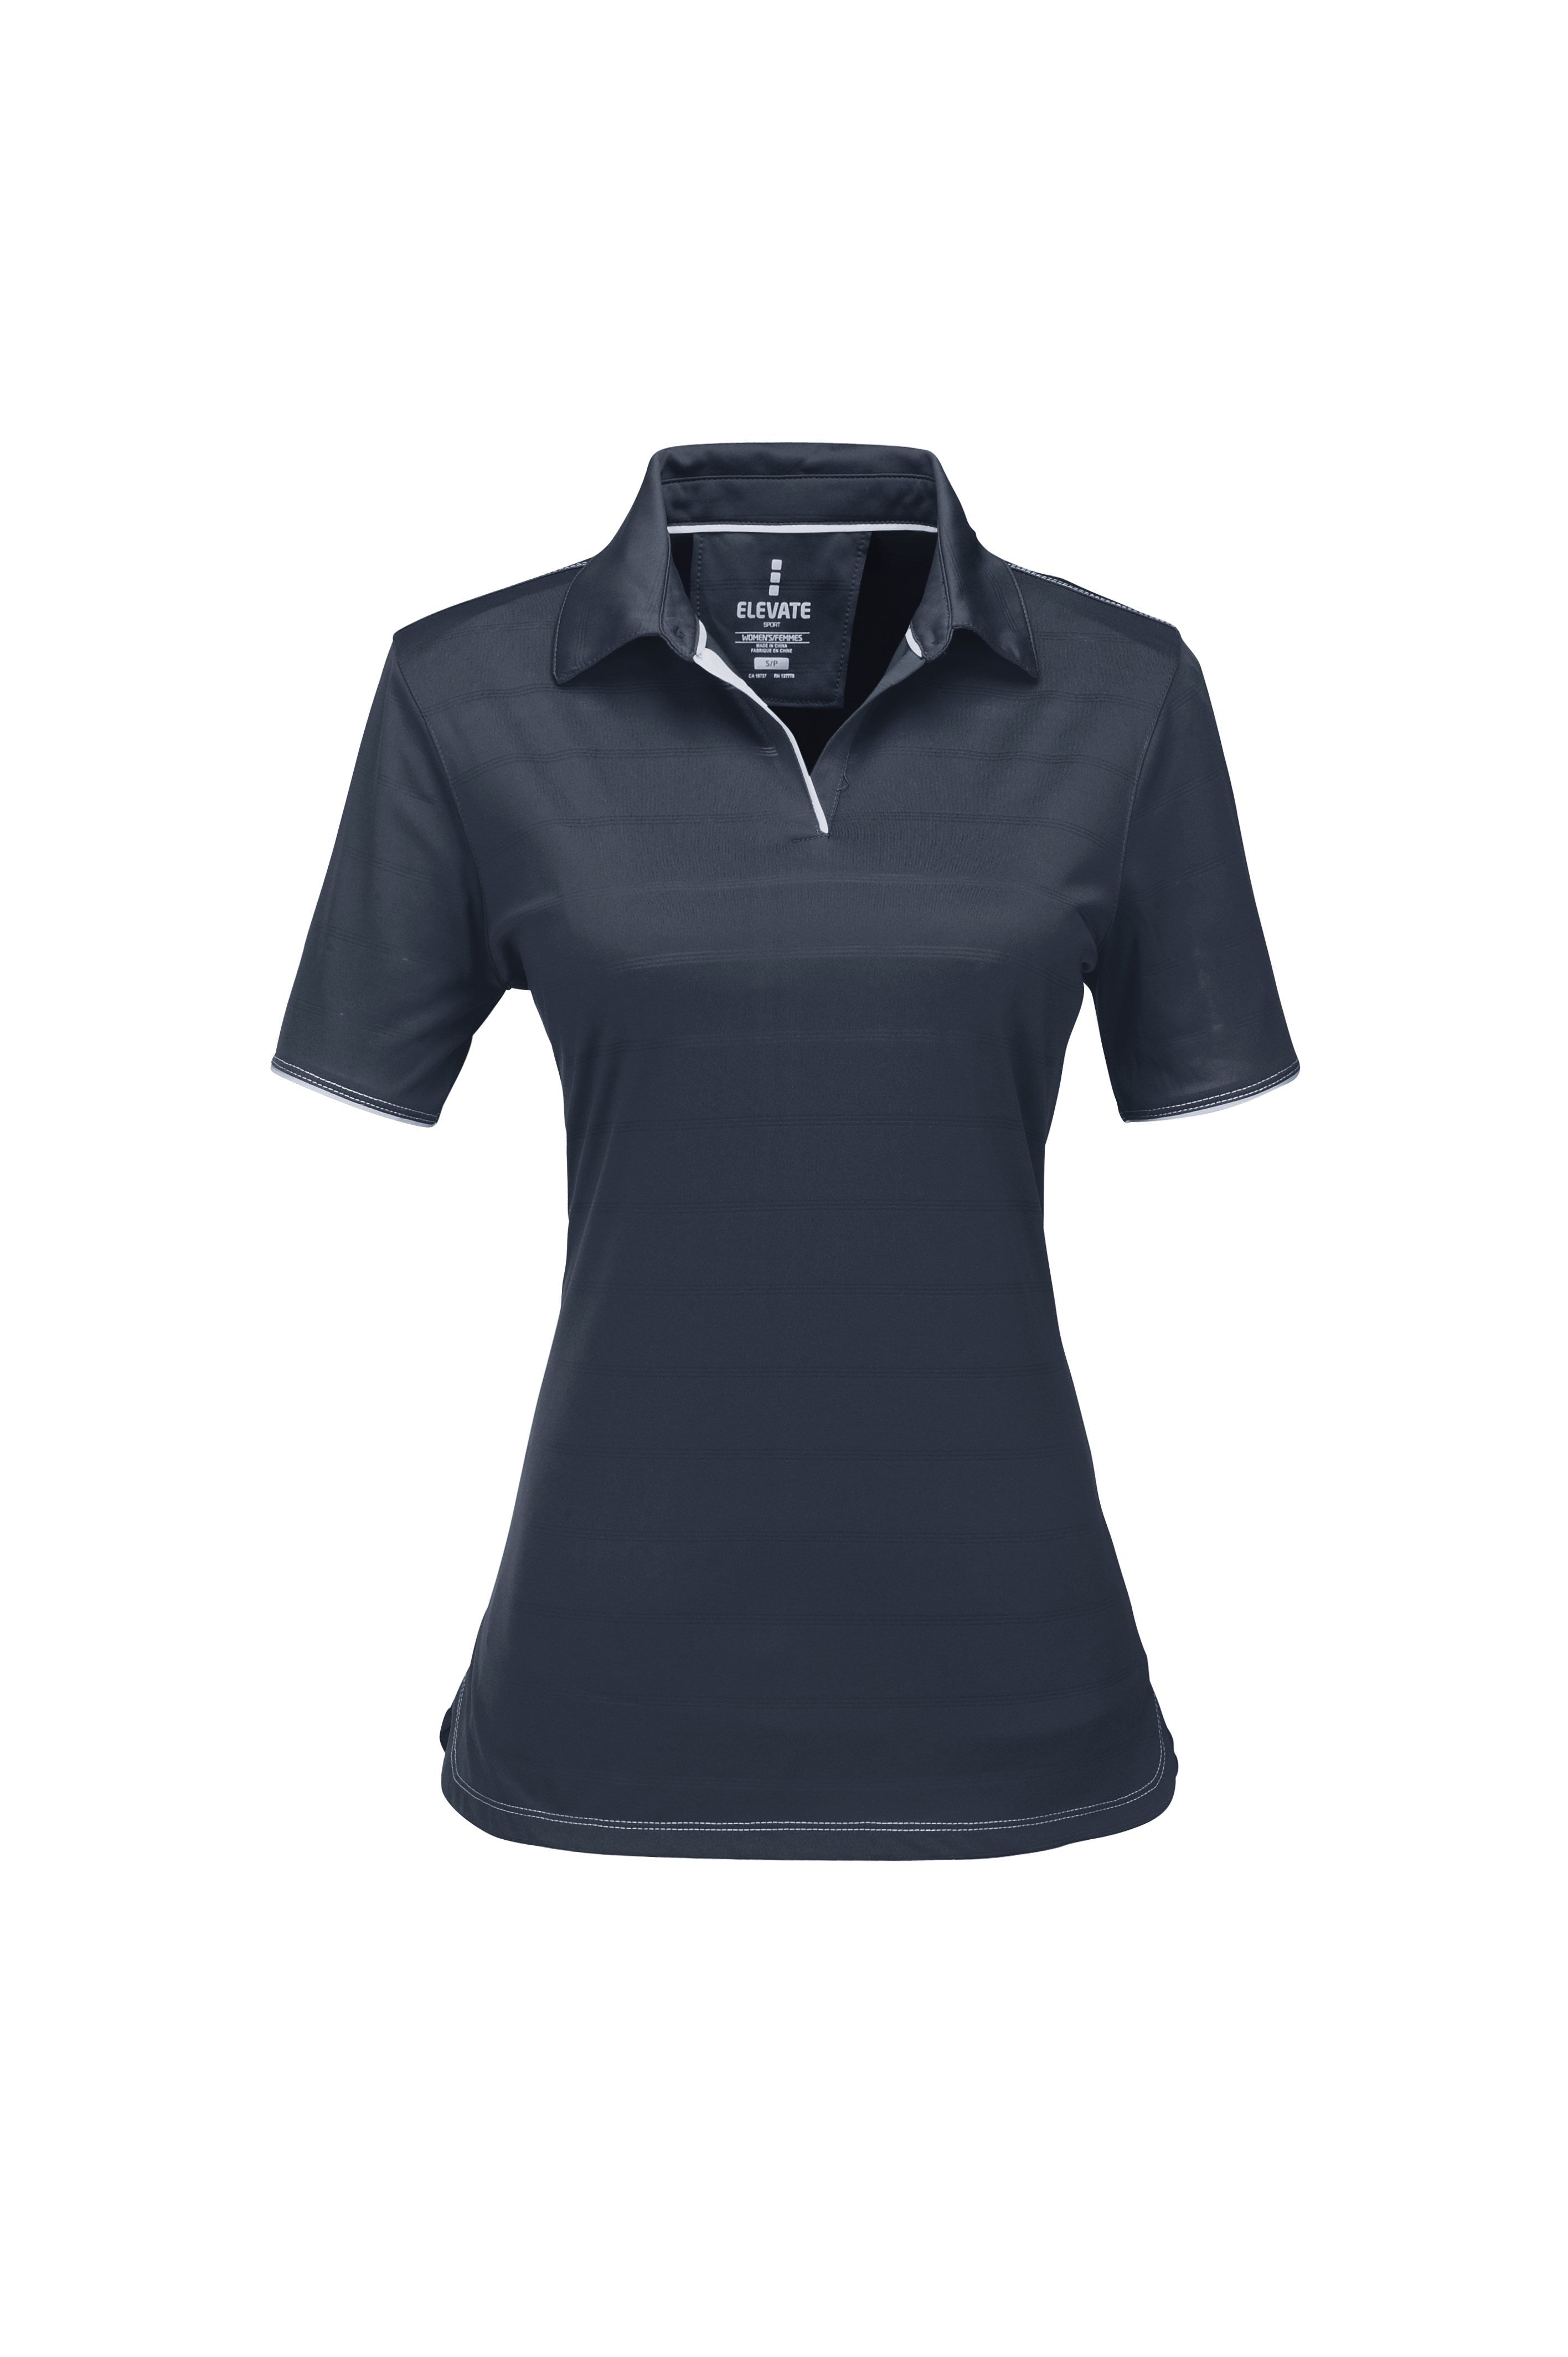 Ladies Prescott Golf Shirt - Black Only-2XL-Navy-N